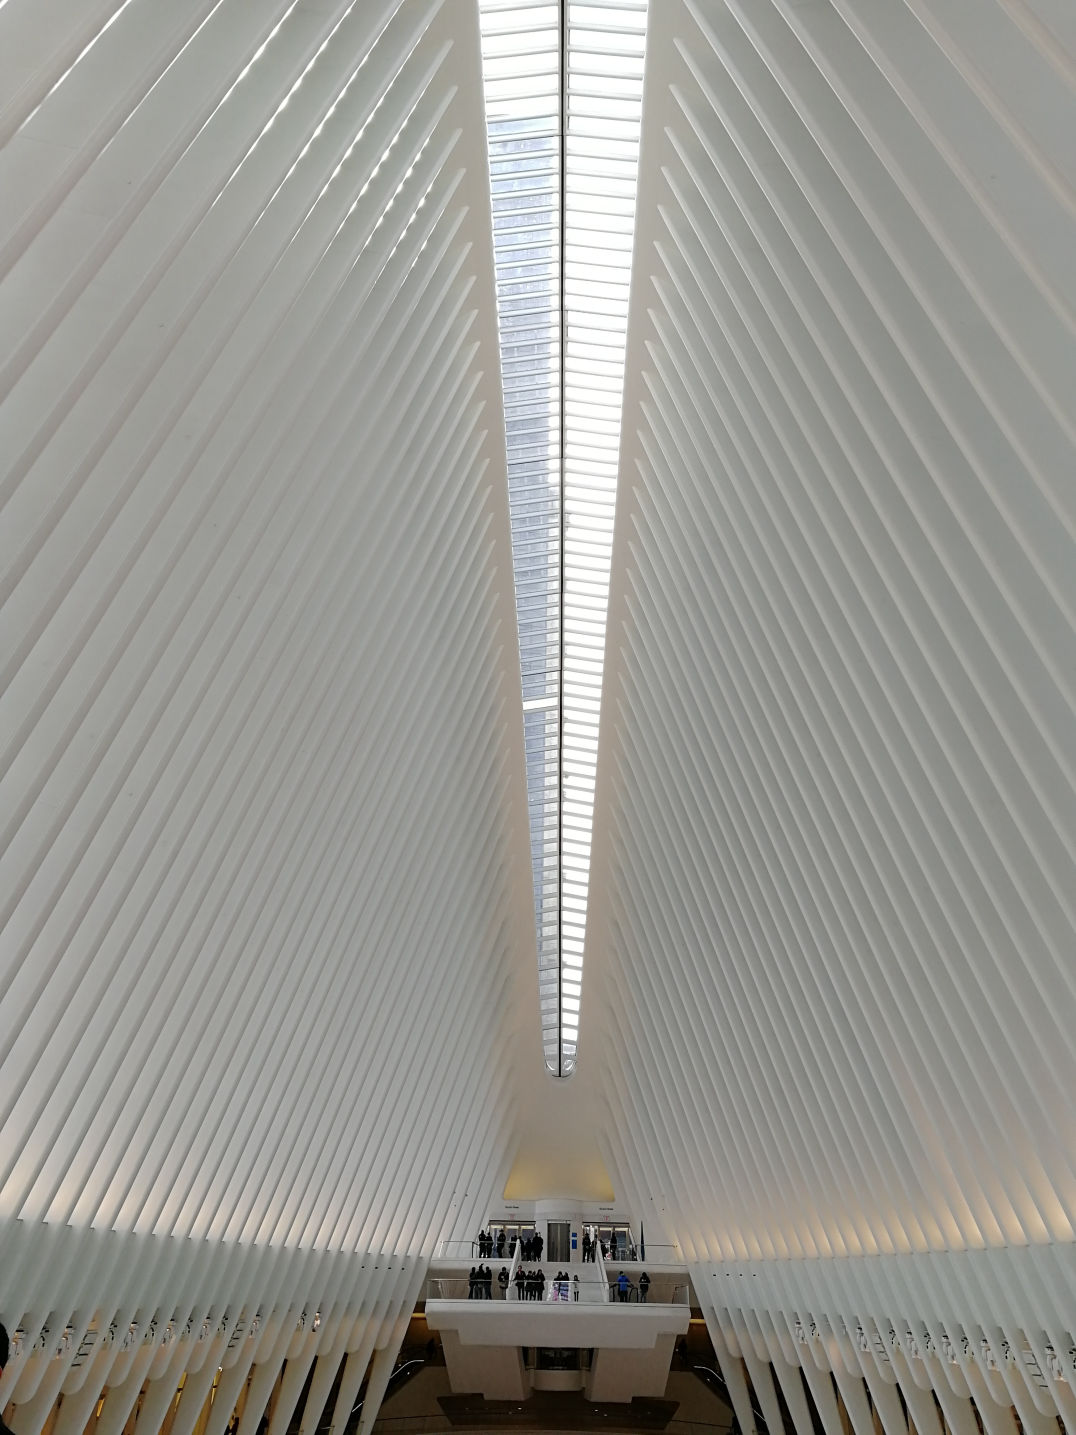 USA / New York / Architecture